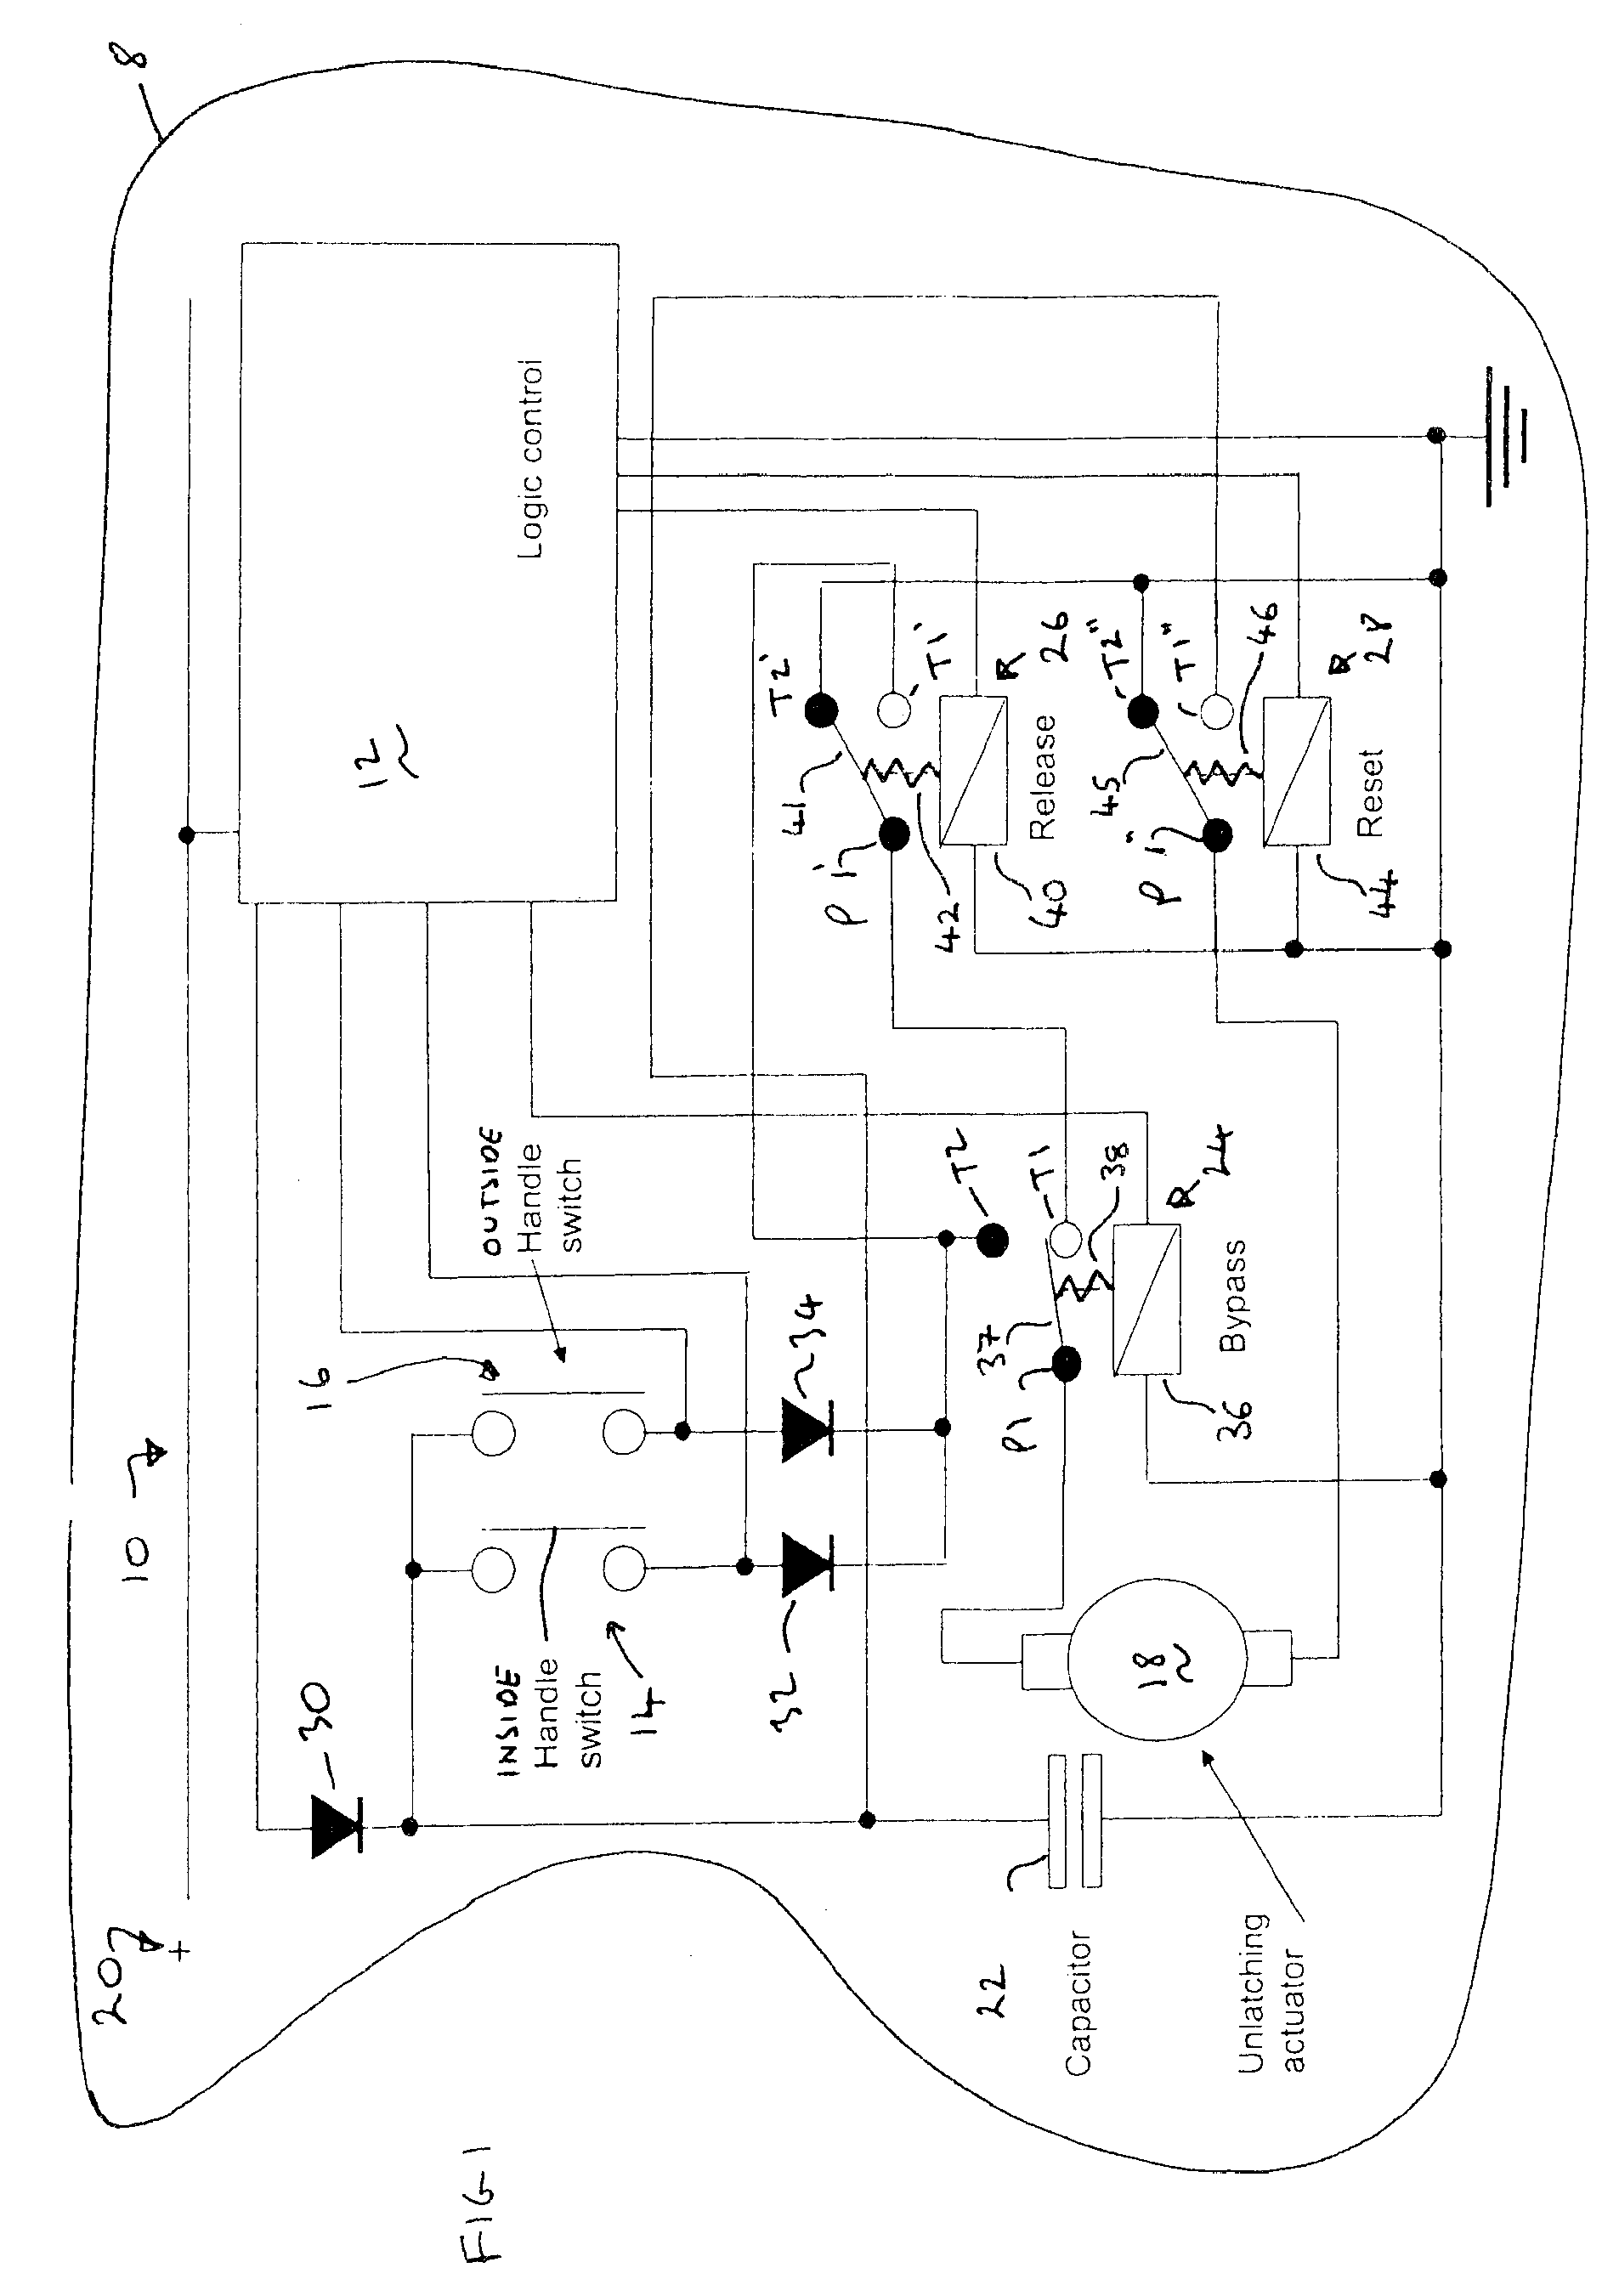 Electrical circuit arrangement